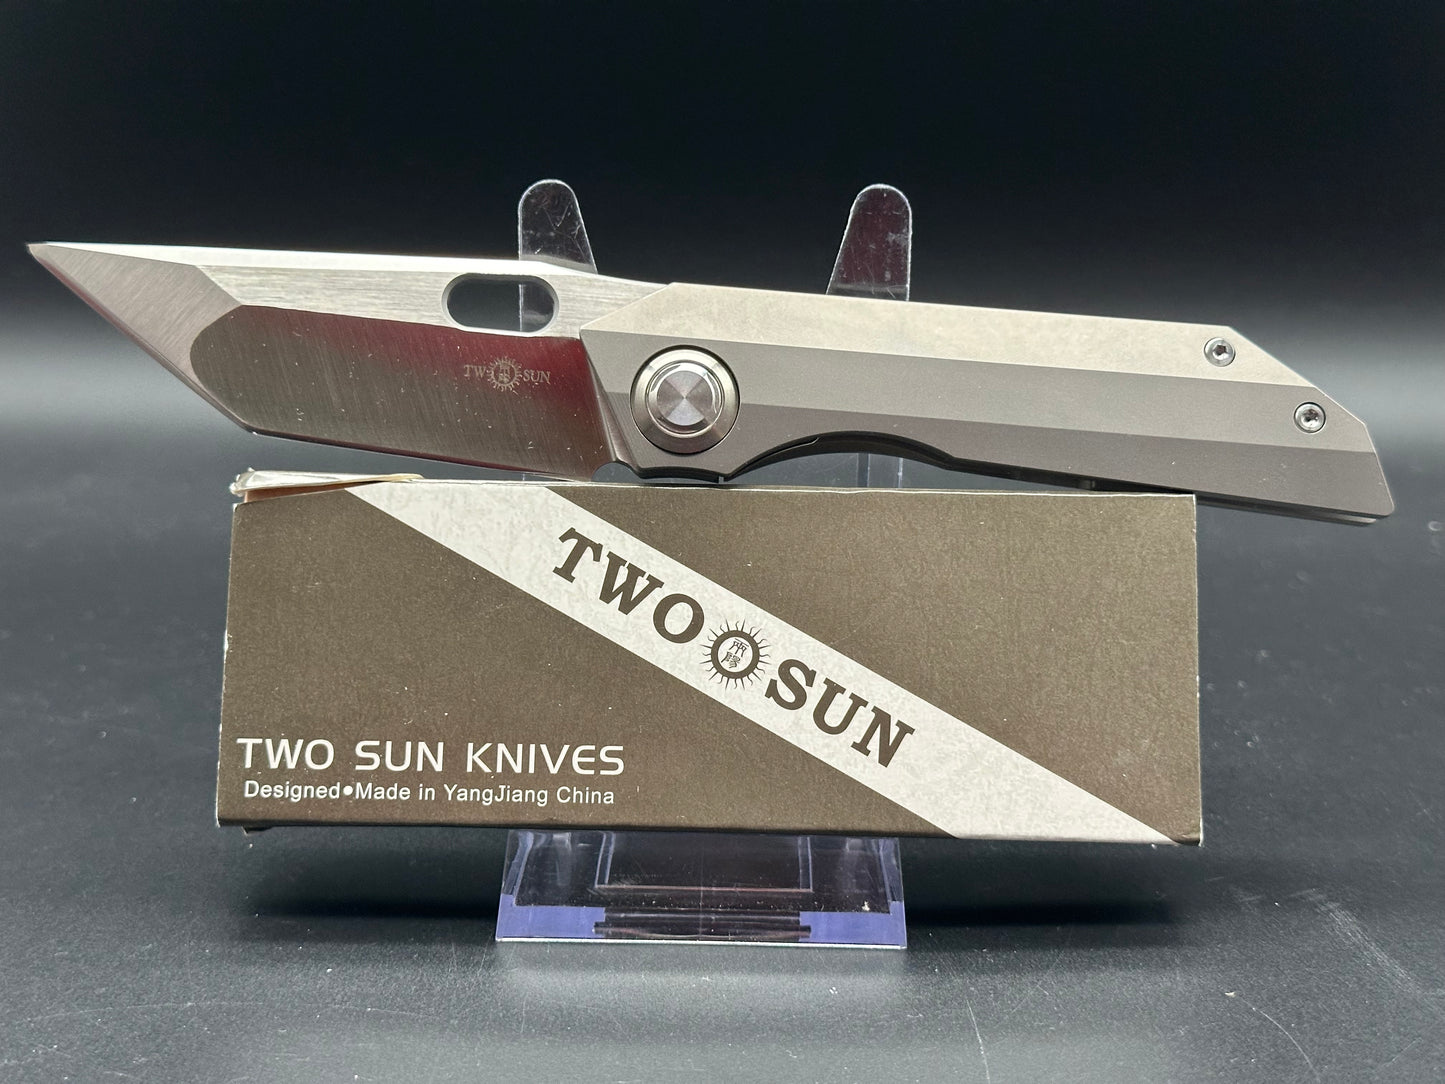 TWOSUN FOLDING KNIFE GRAY TITANIUM HANDLE 14C28N PLAIN EDGE TS300